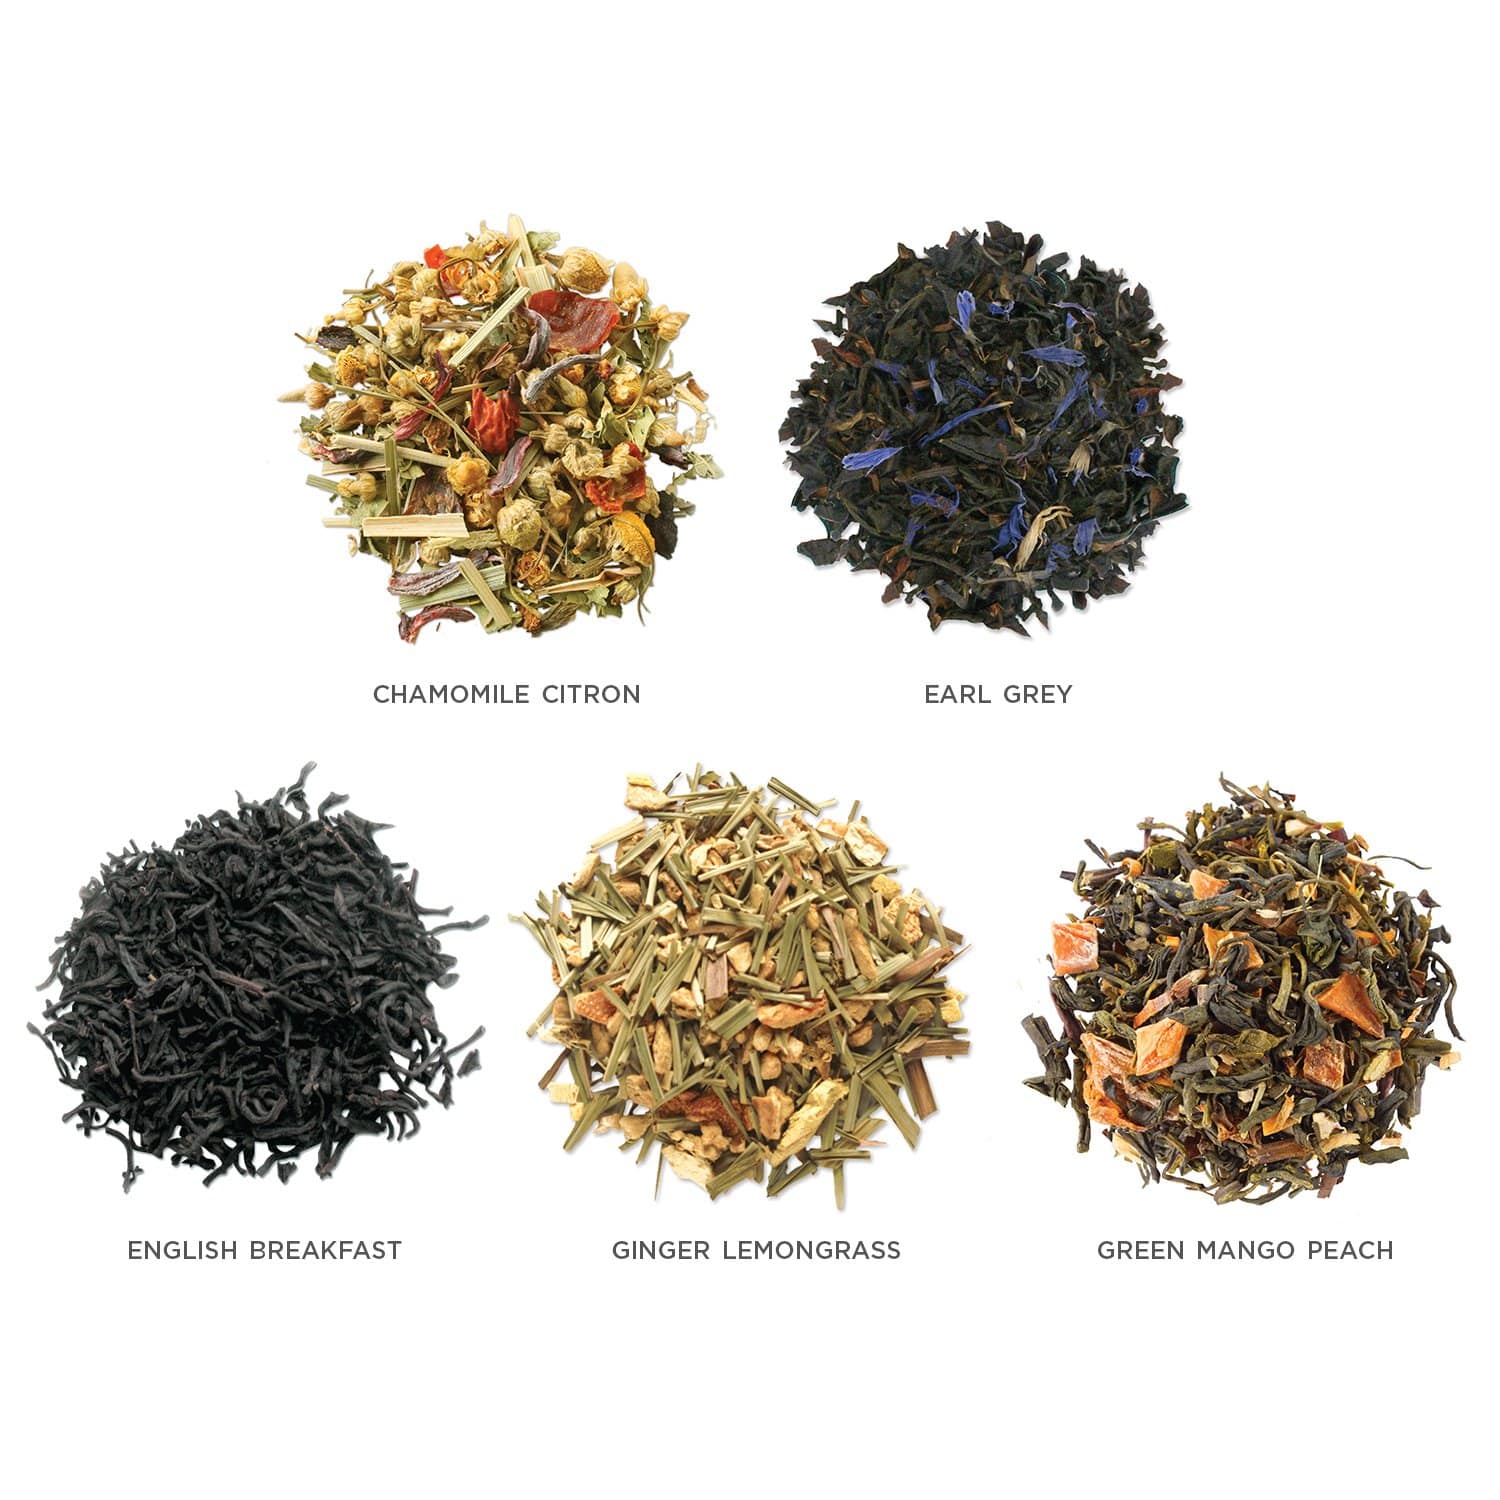 Tea Forte Single Steeps Loose Leaf Tea Sampler: A Delightful Assortment for Tea Lovers